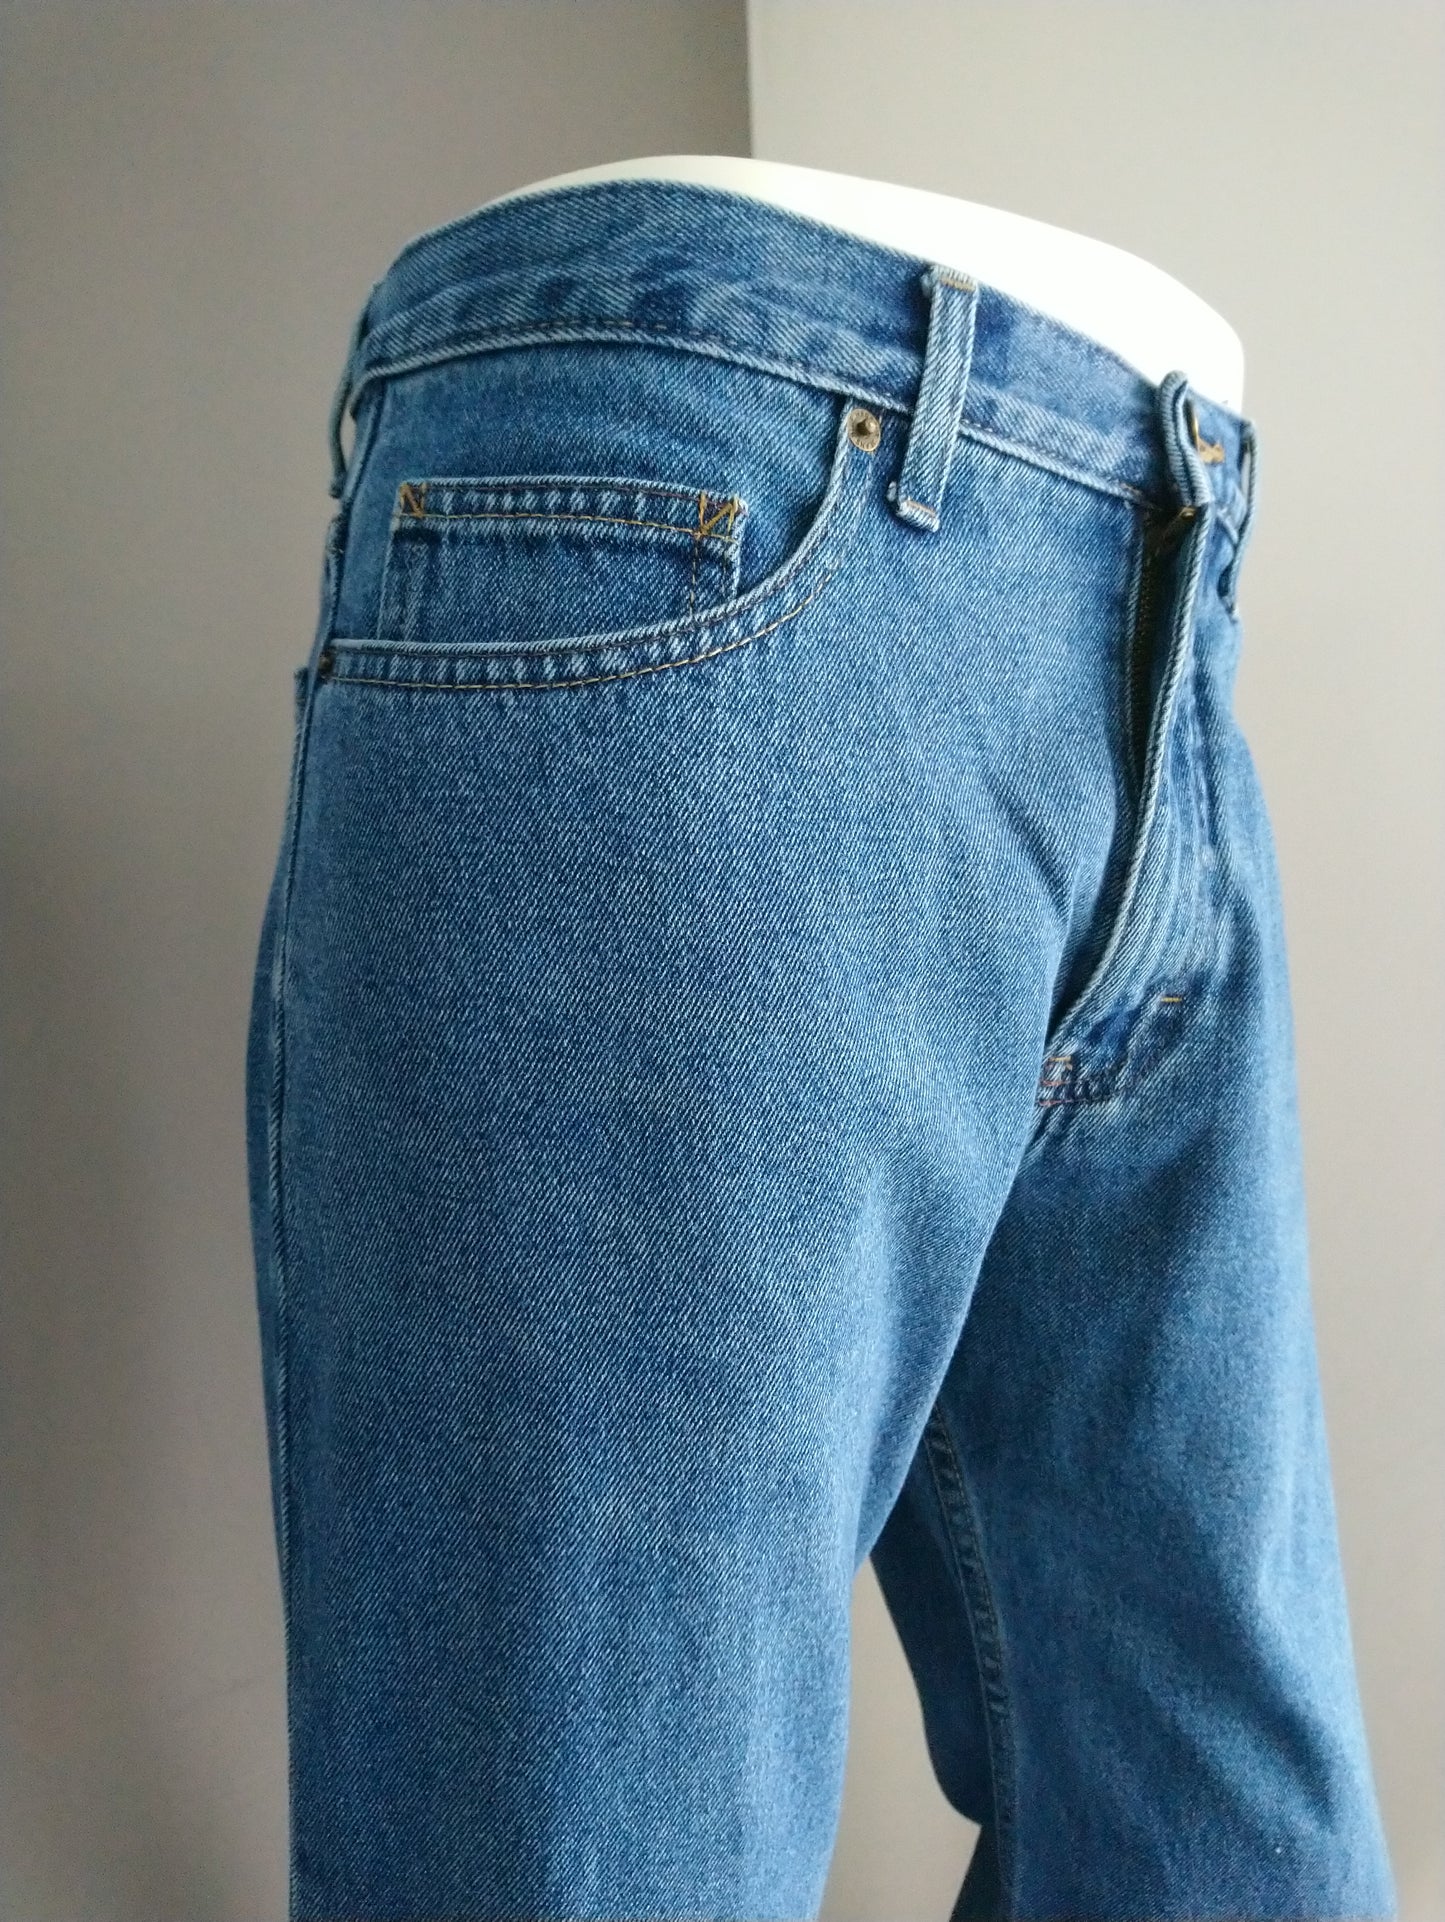 Blue Harbour jeans. Blauw gekleurd. Maat W32 - L30.